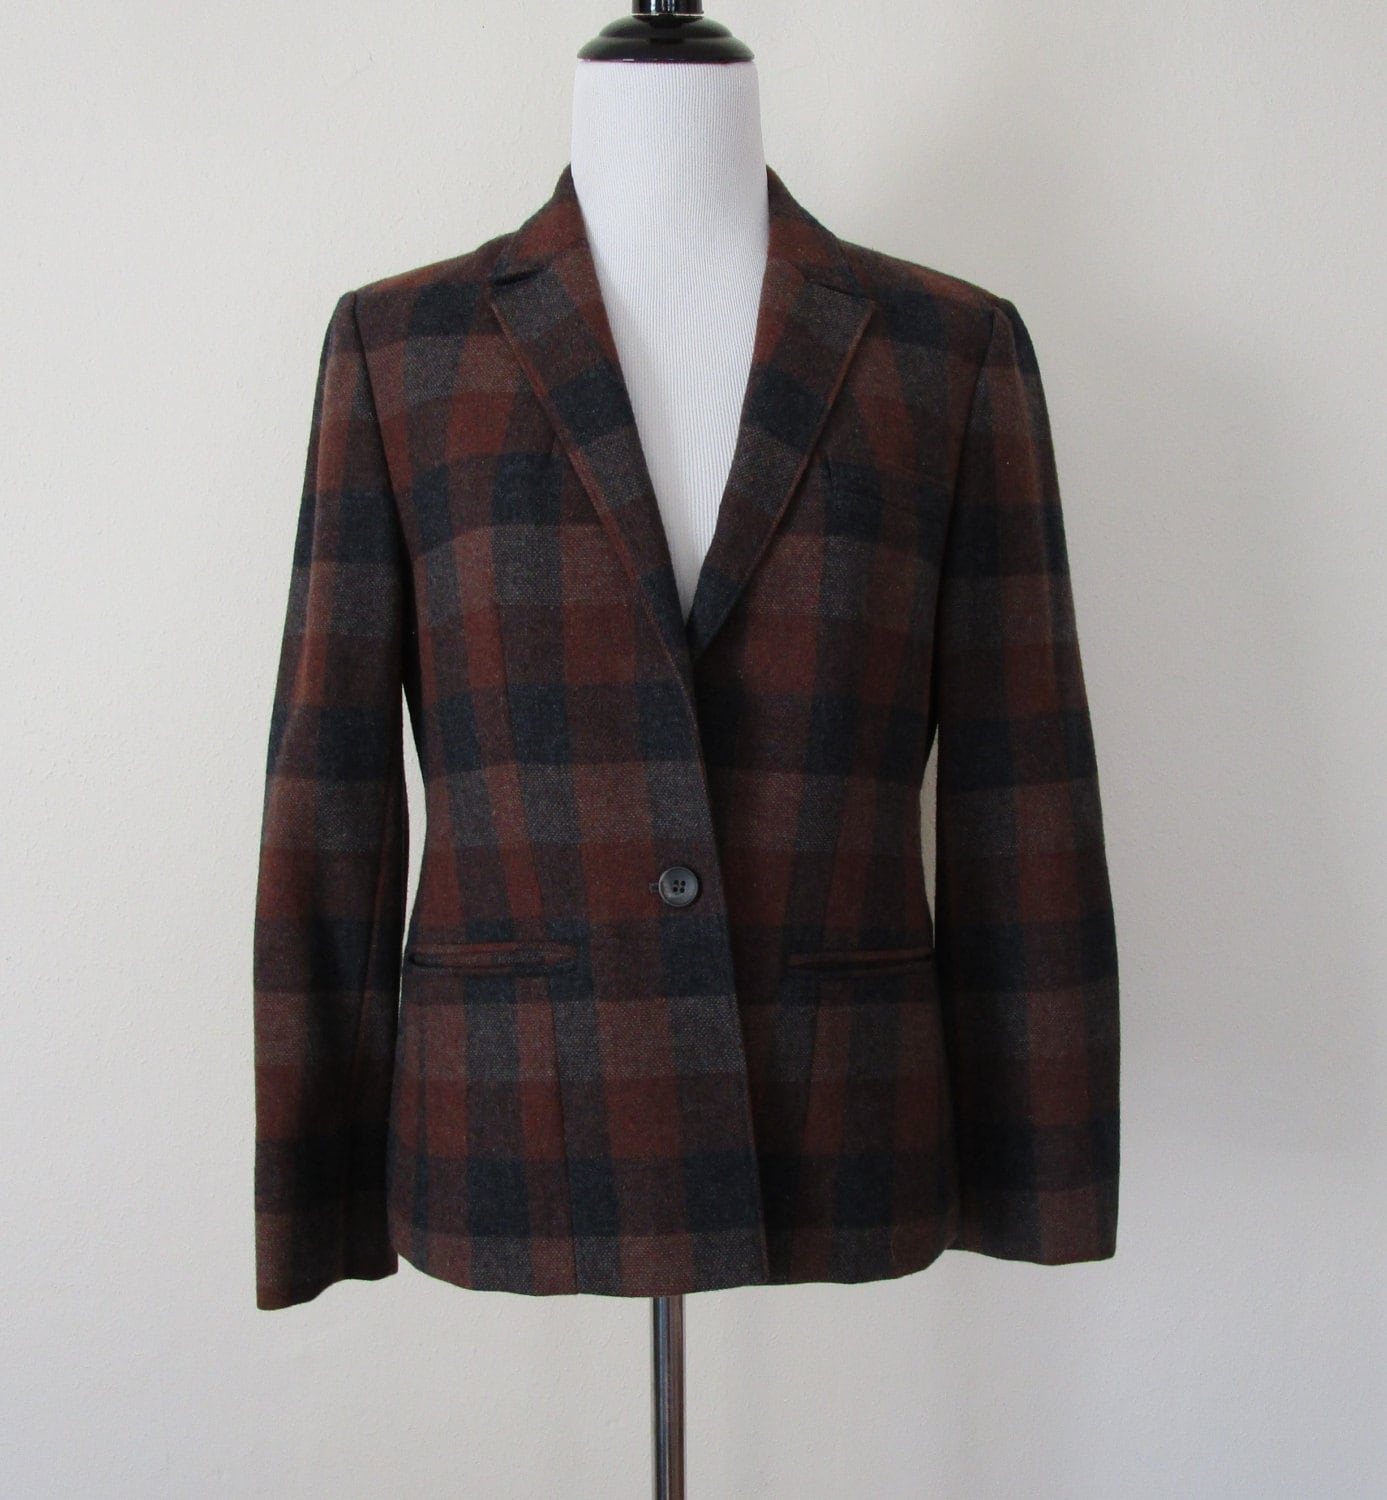 Pendleton Jacket Vintage 70s Plaid Wool Blazer Gray Brown Red